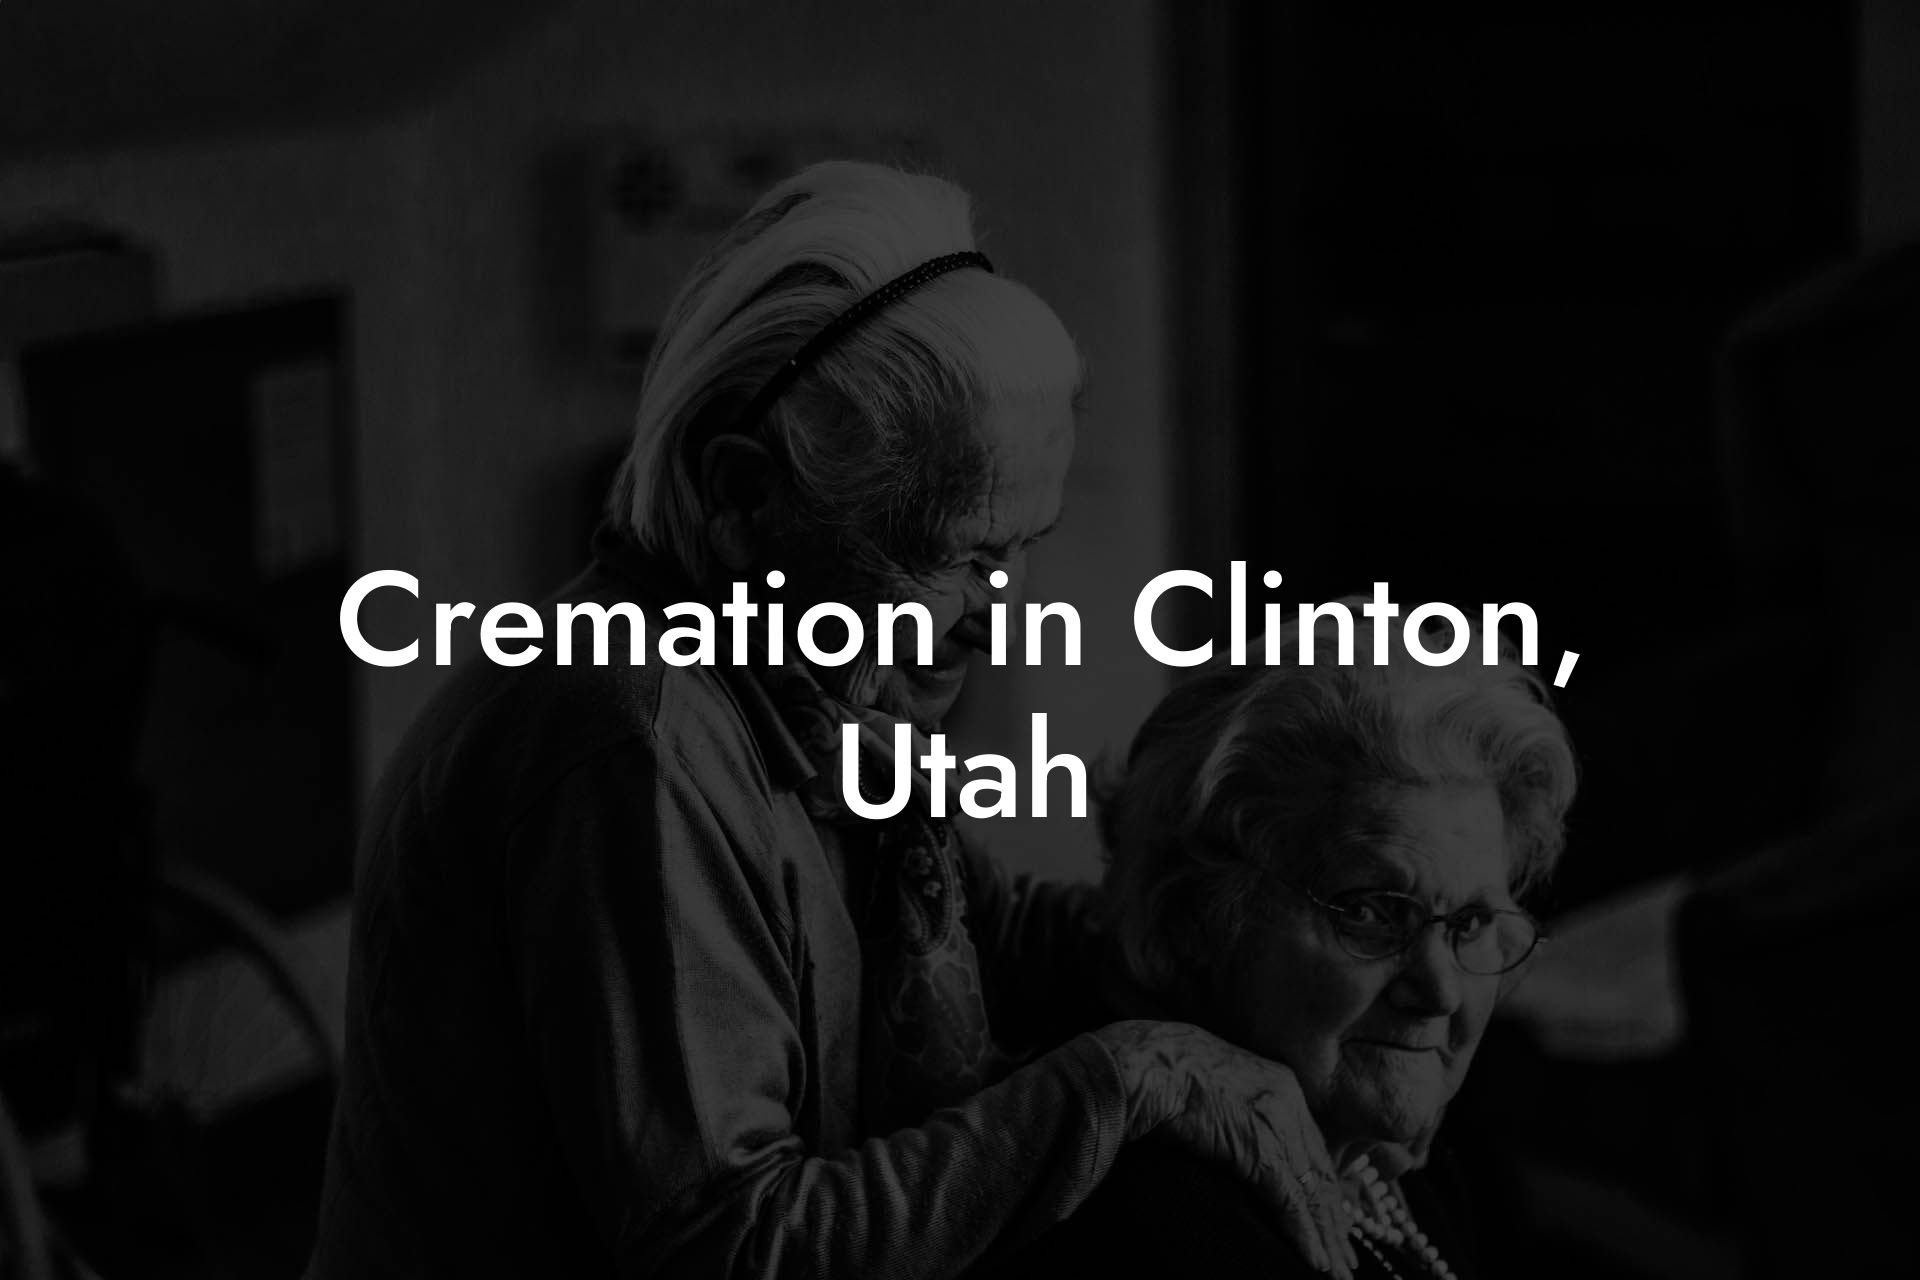 Cremation in Clinton, Utah